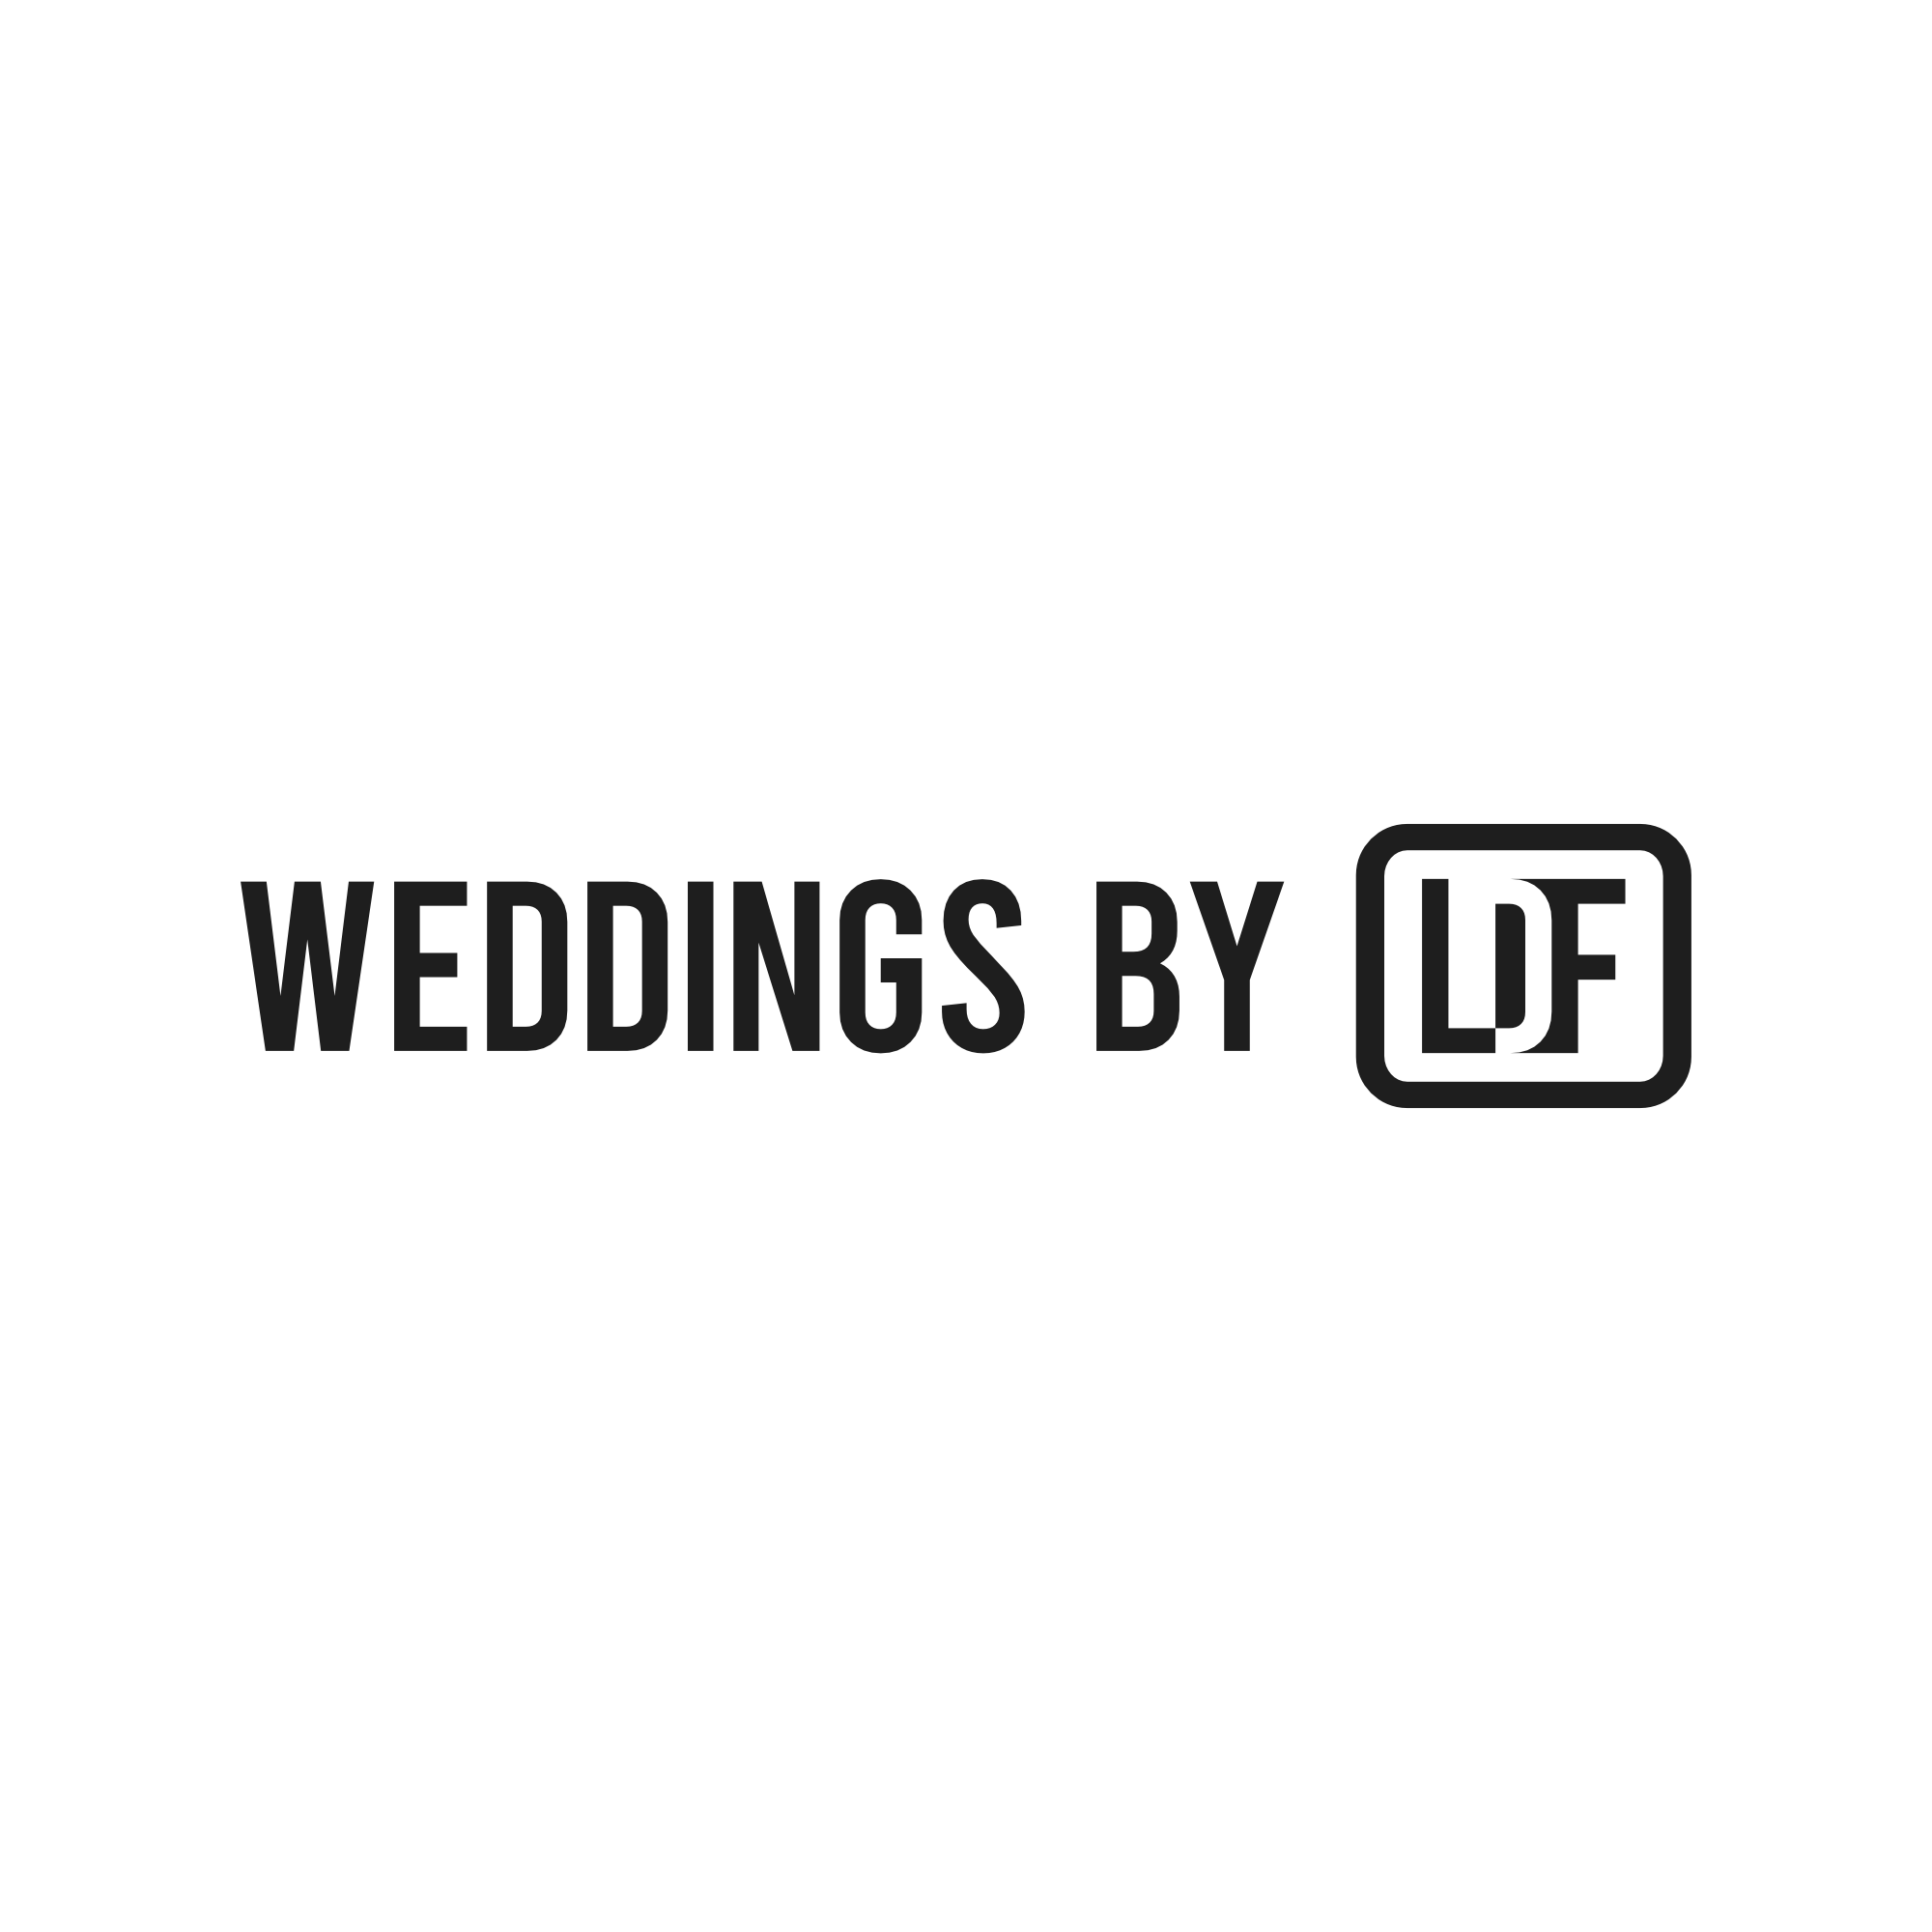 Weddings by LDF